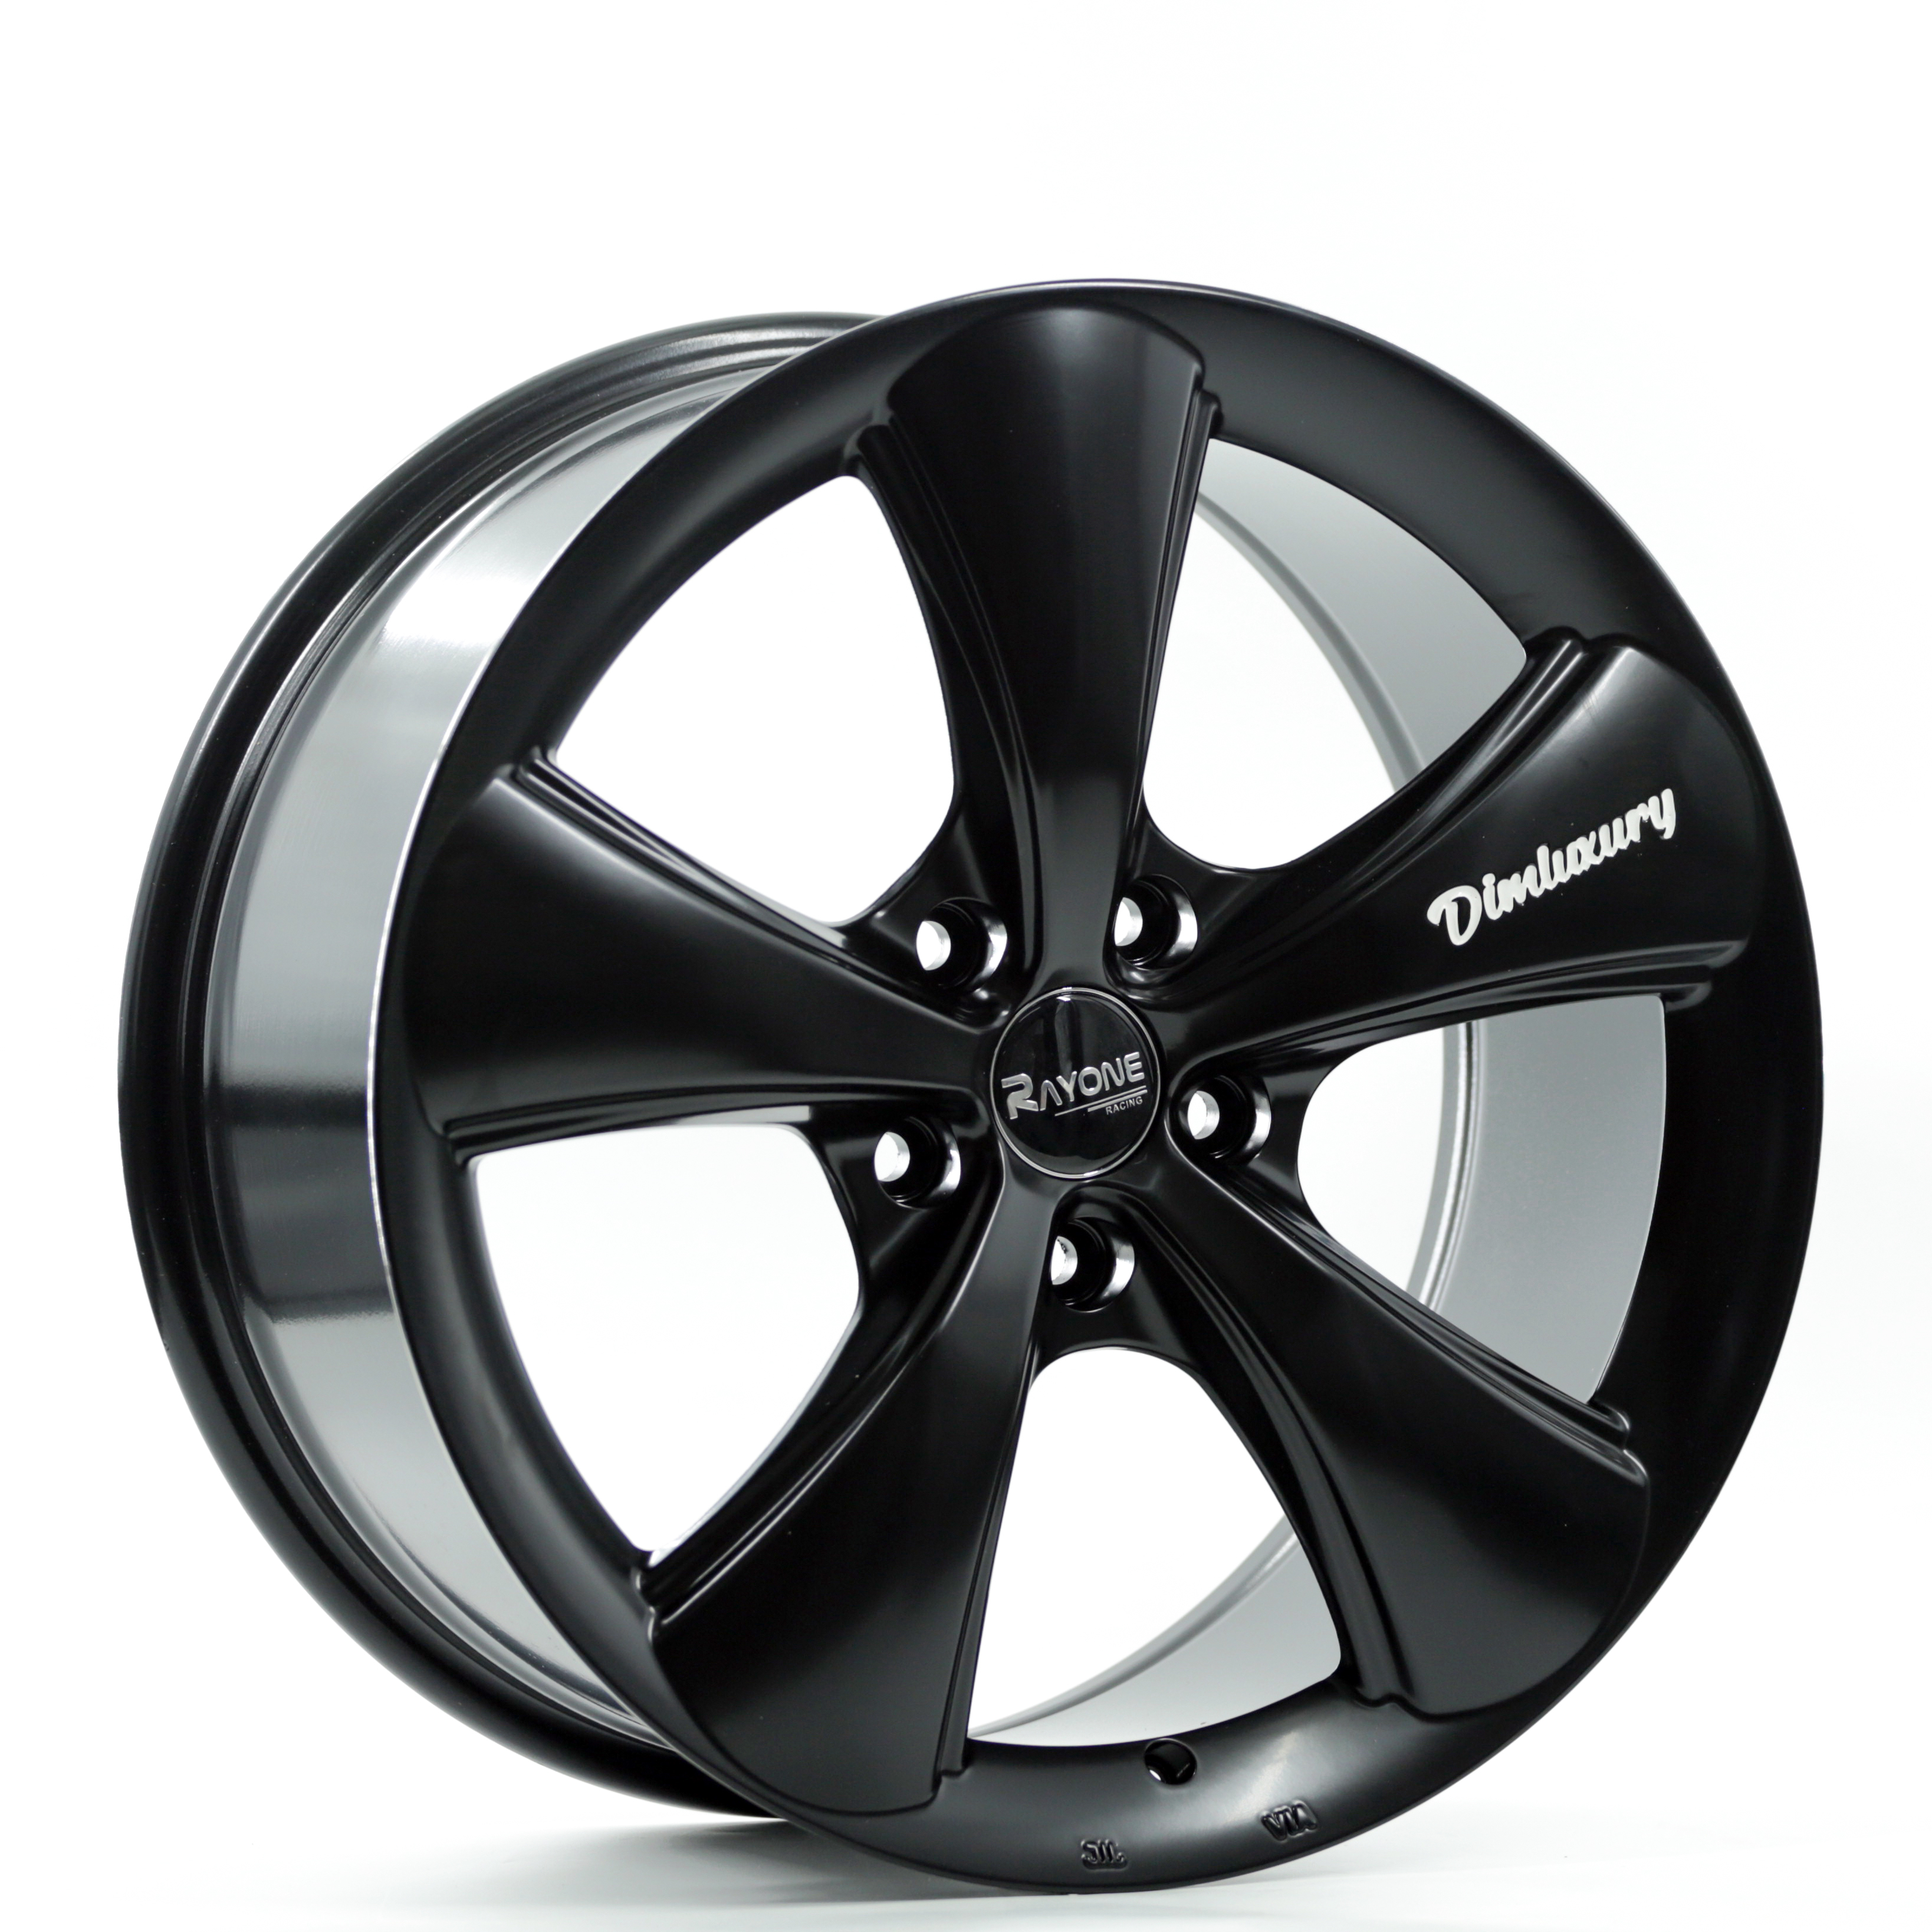 Low MOQ for Safari Alloy Wheels - Rayone China Alloy Wheels Factory 18/19inch For Racing Car – Rayone